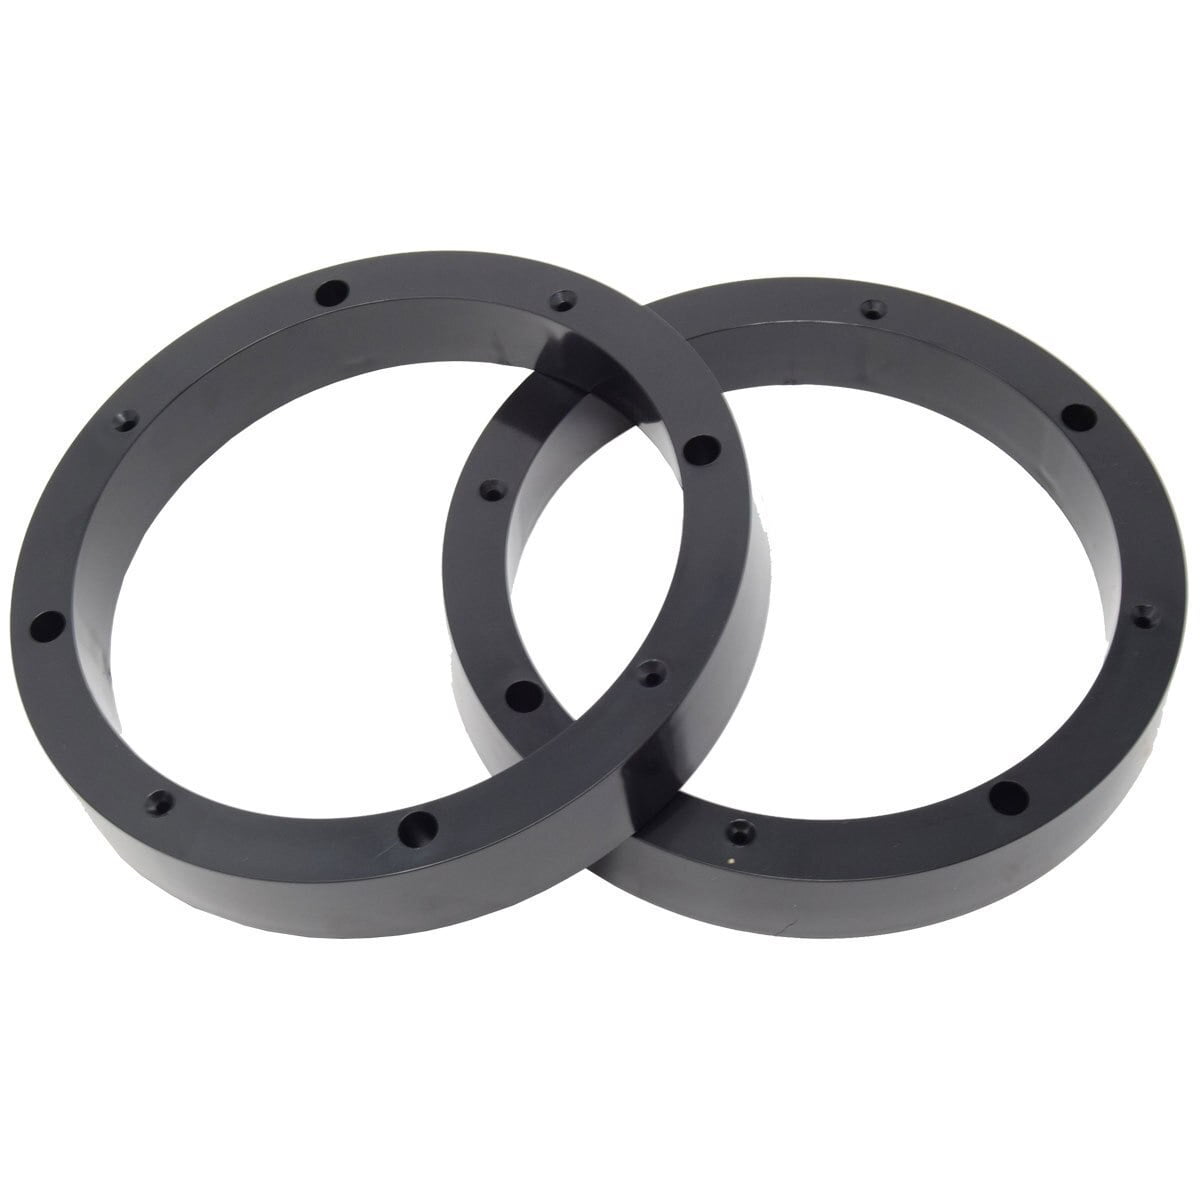 6.5 Car Speaker Spacers Adapter Bracket Ring Plastic Replacement Parts Black 2Pcs 